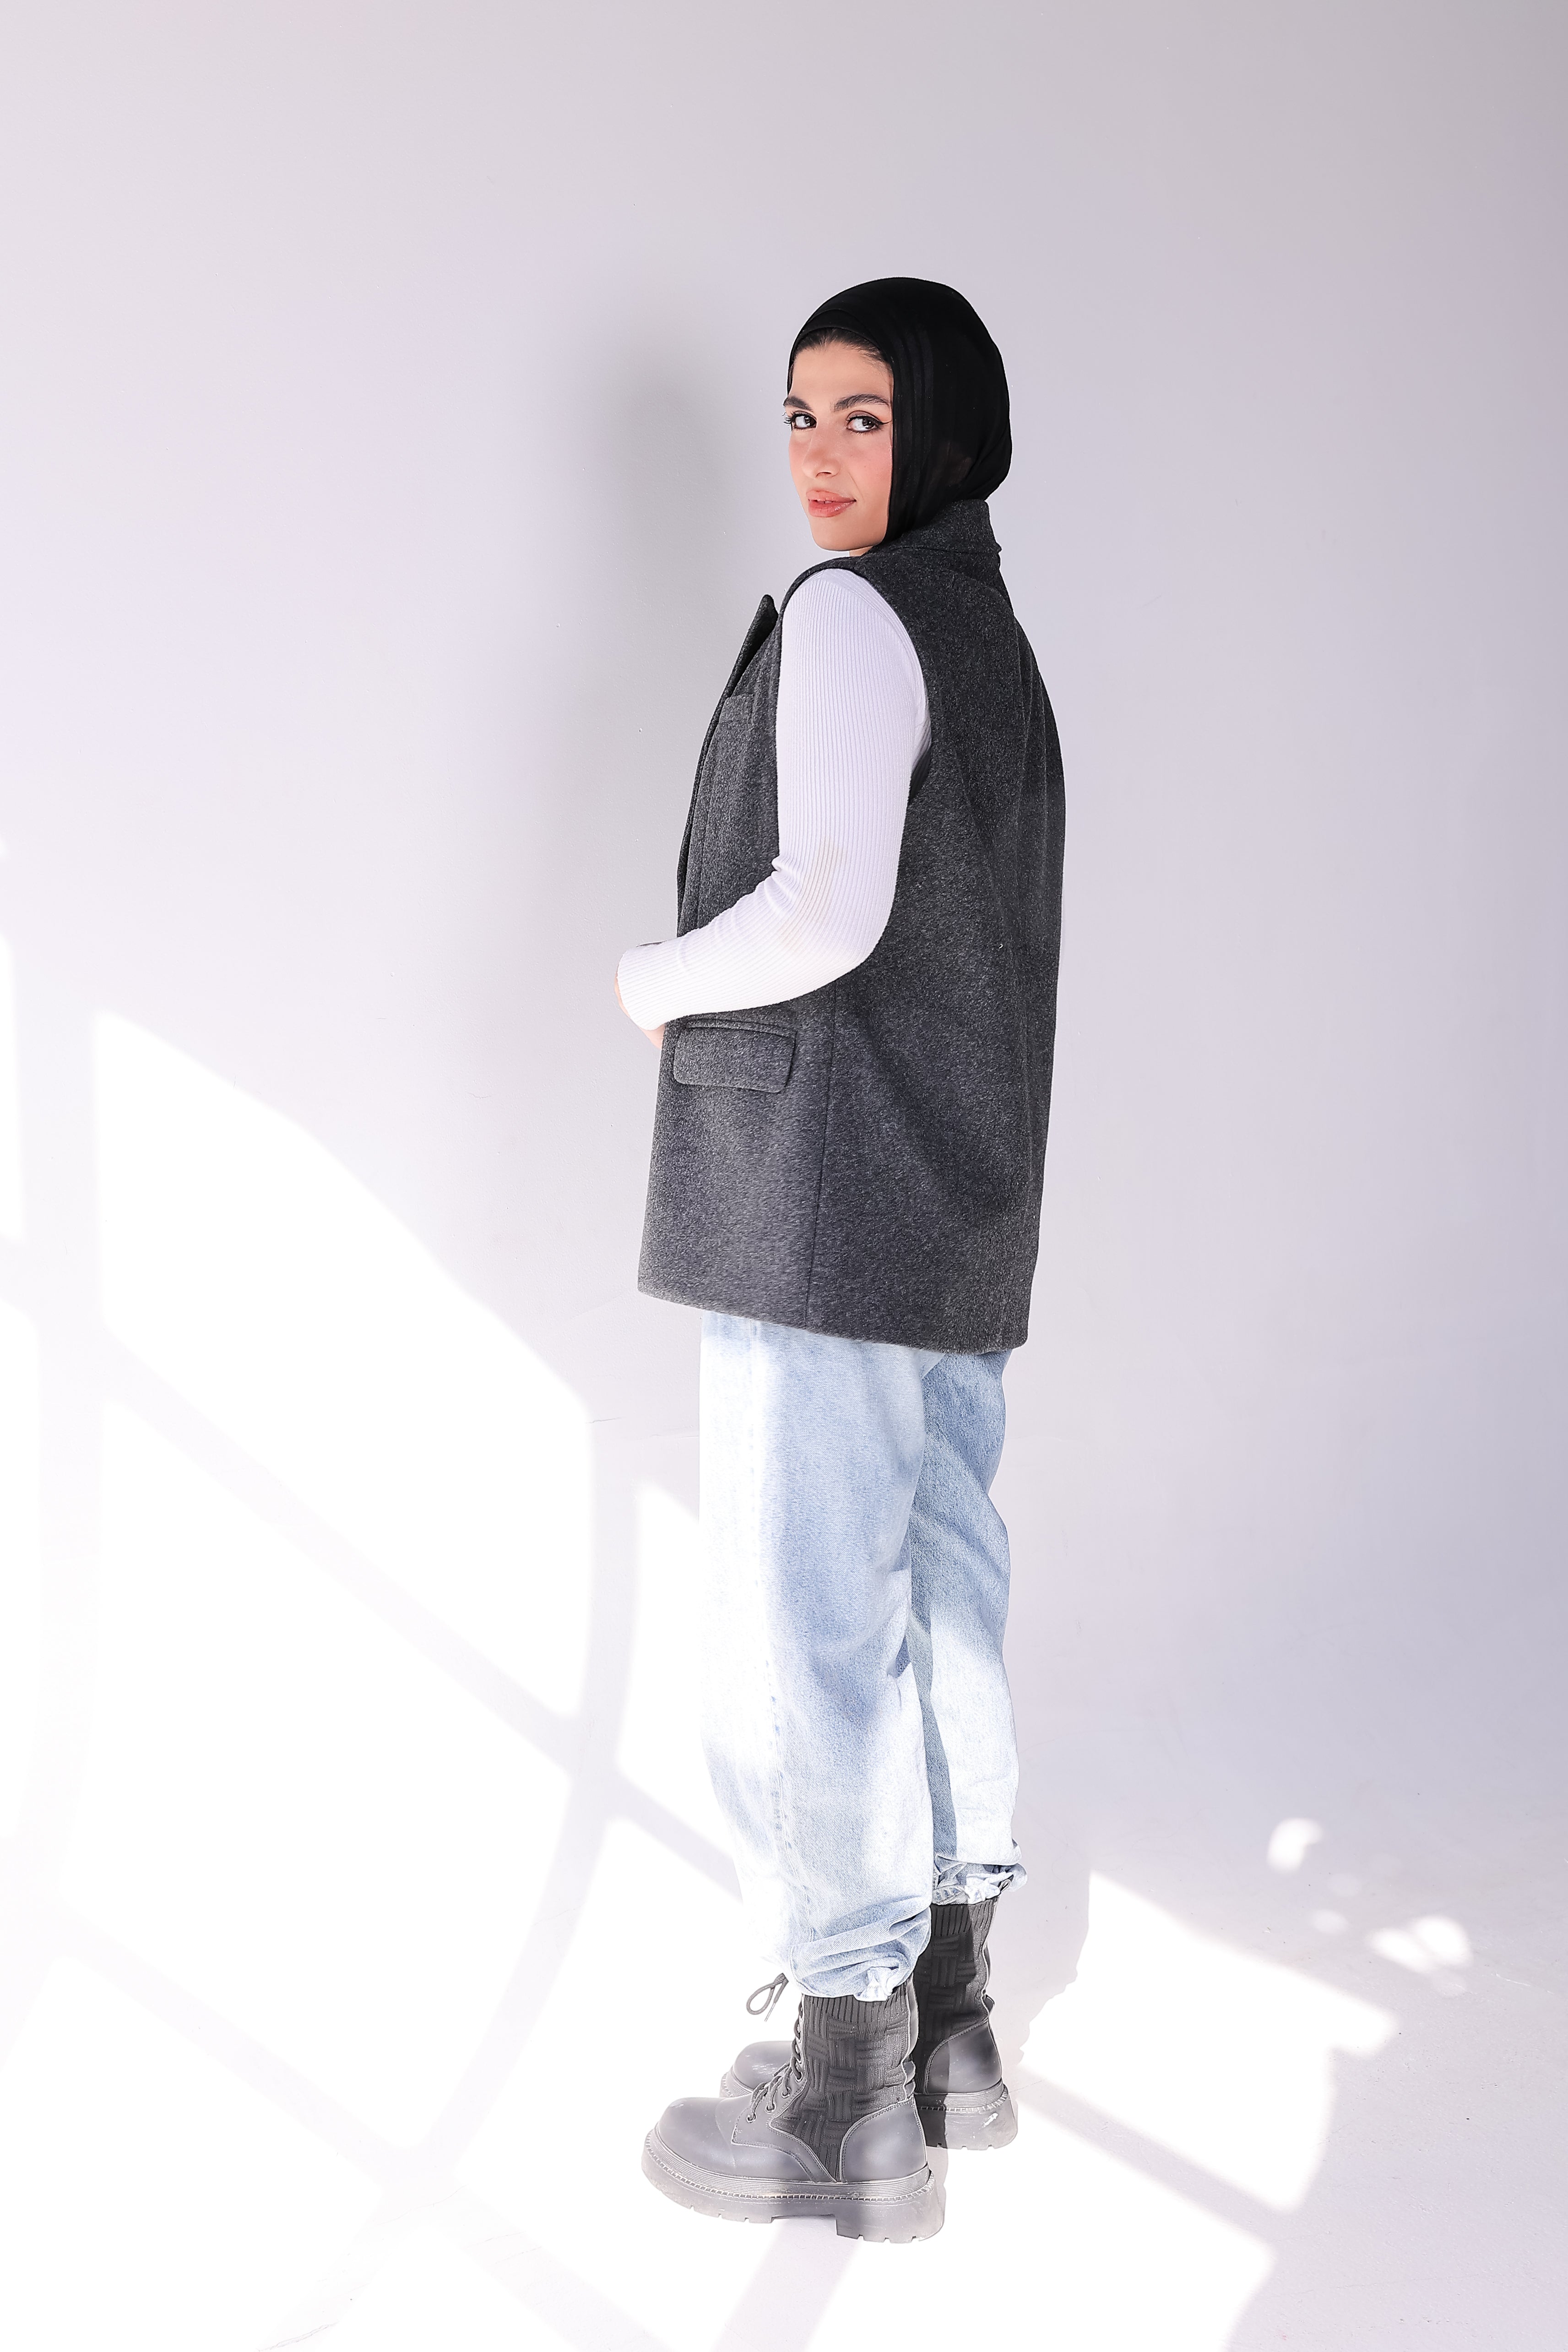 Wool Sleeveless Pocket long Vest in dark grey